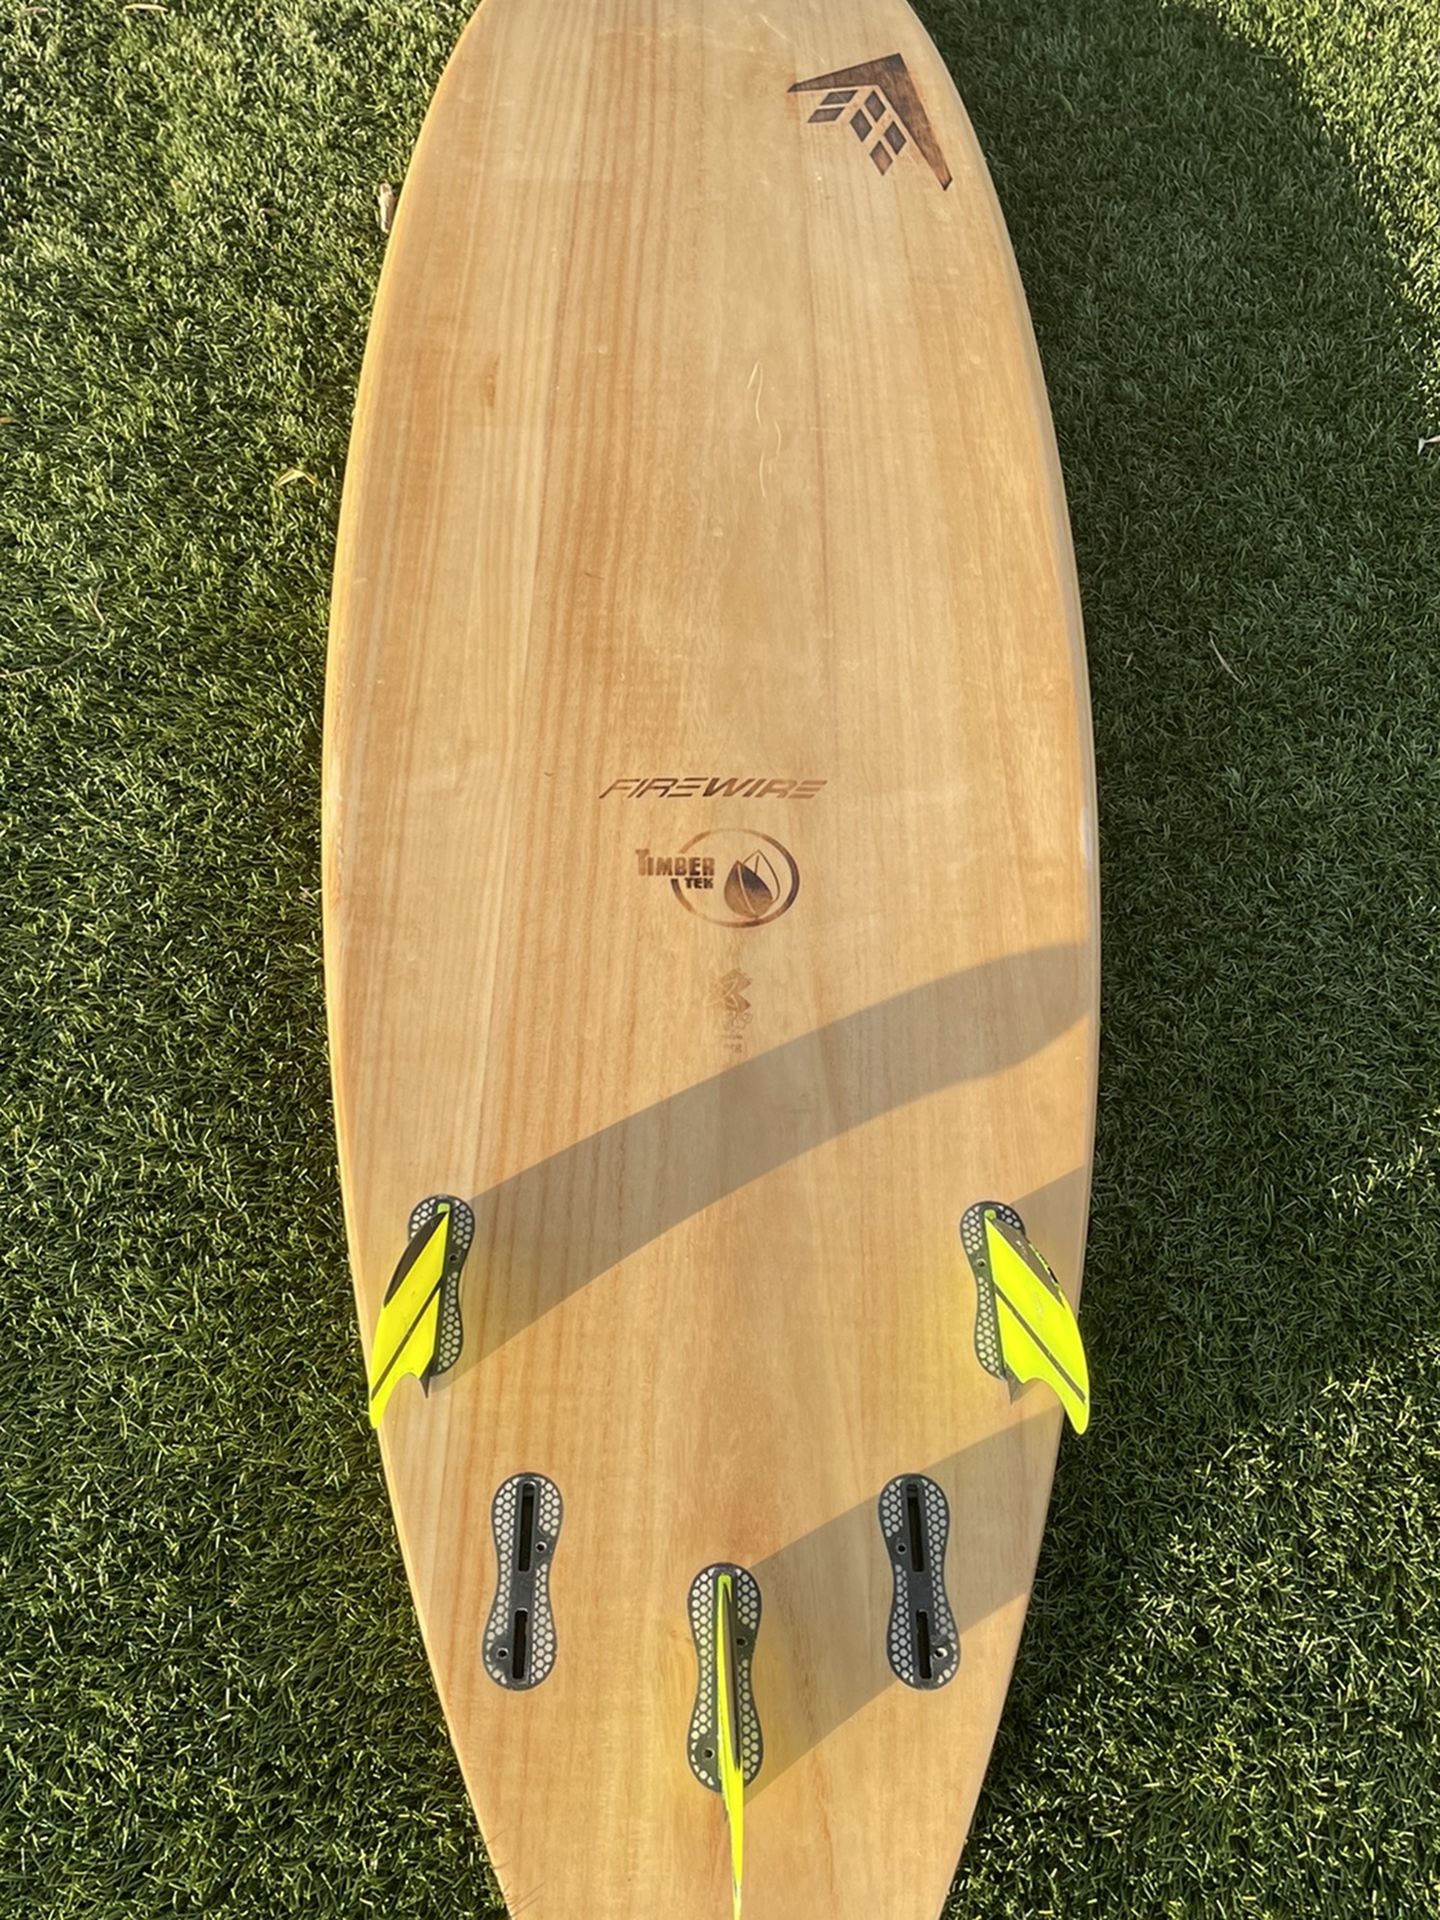 7'0" Surfboard - Firewire "Submoon"